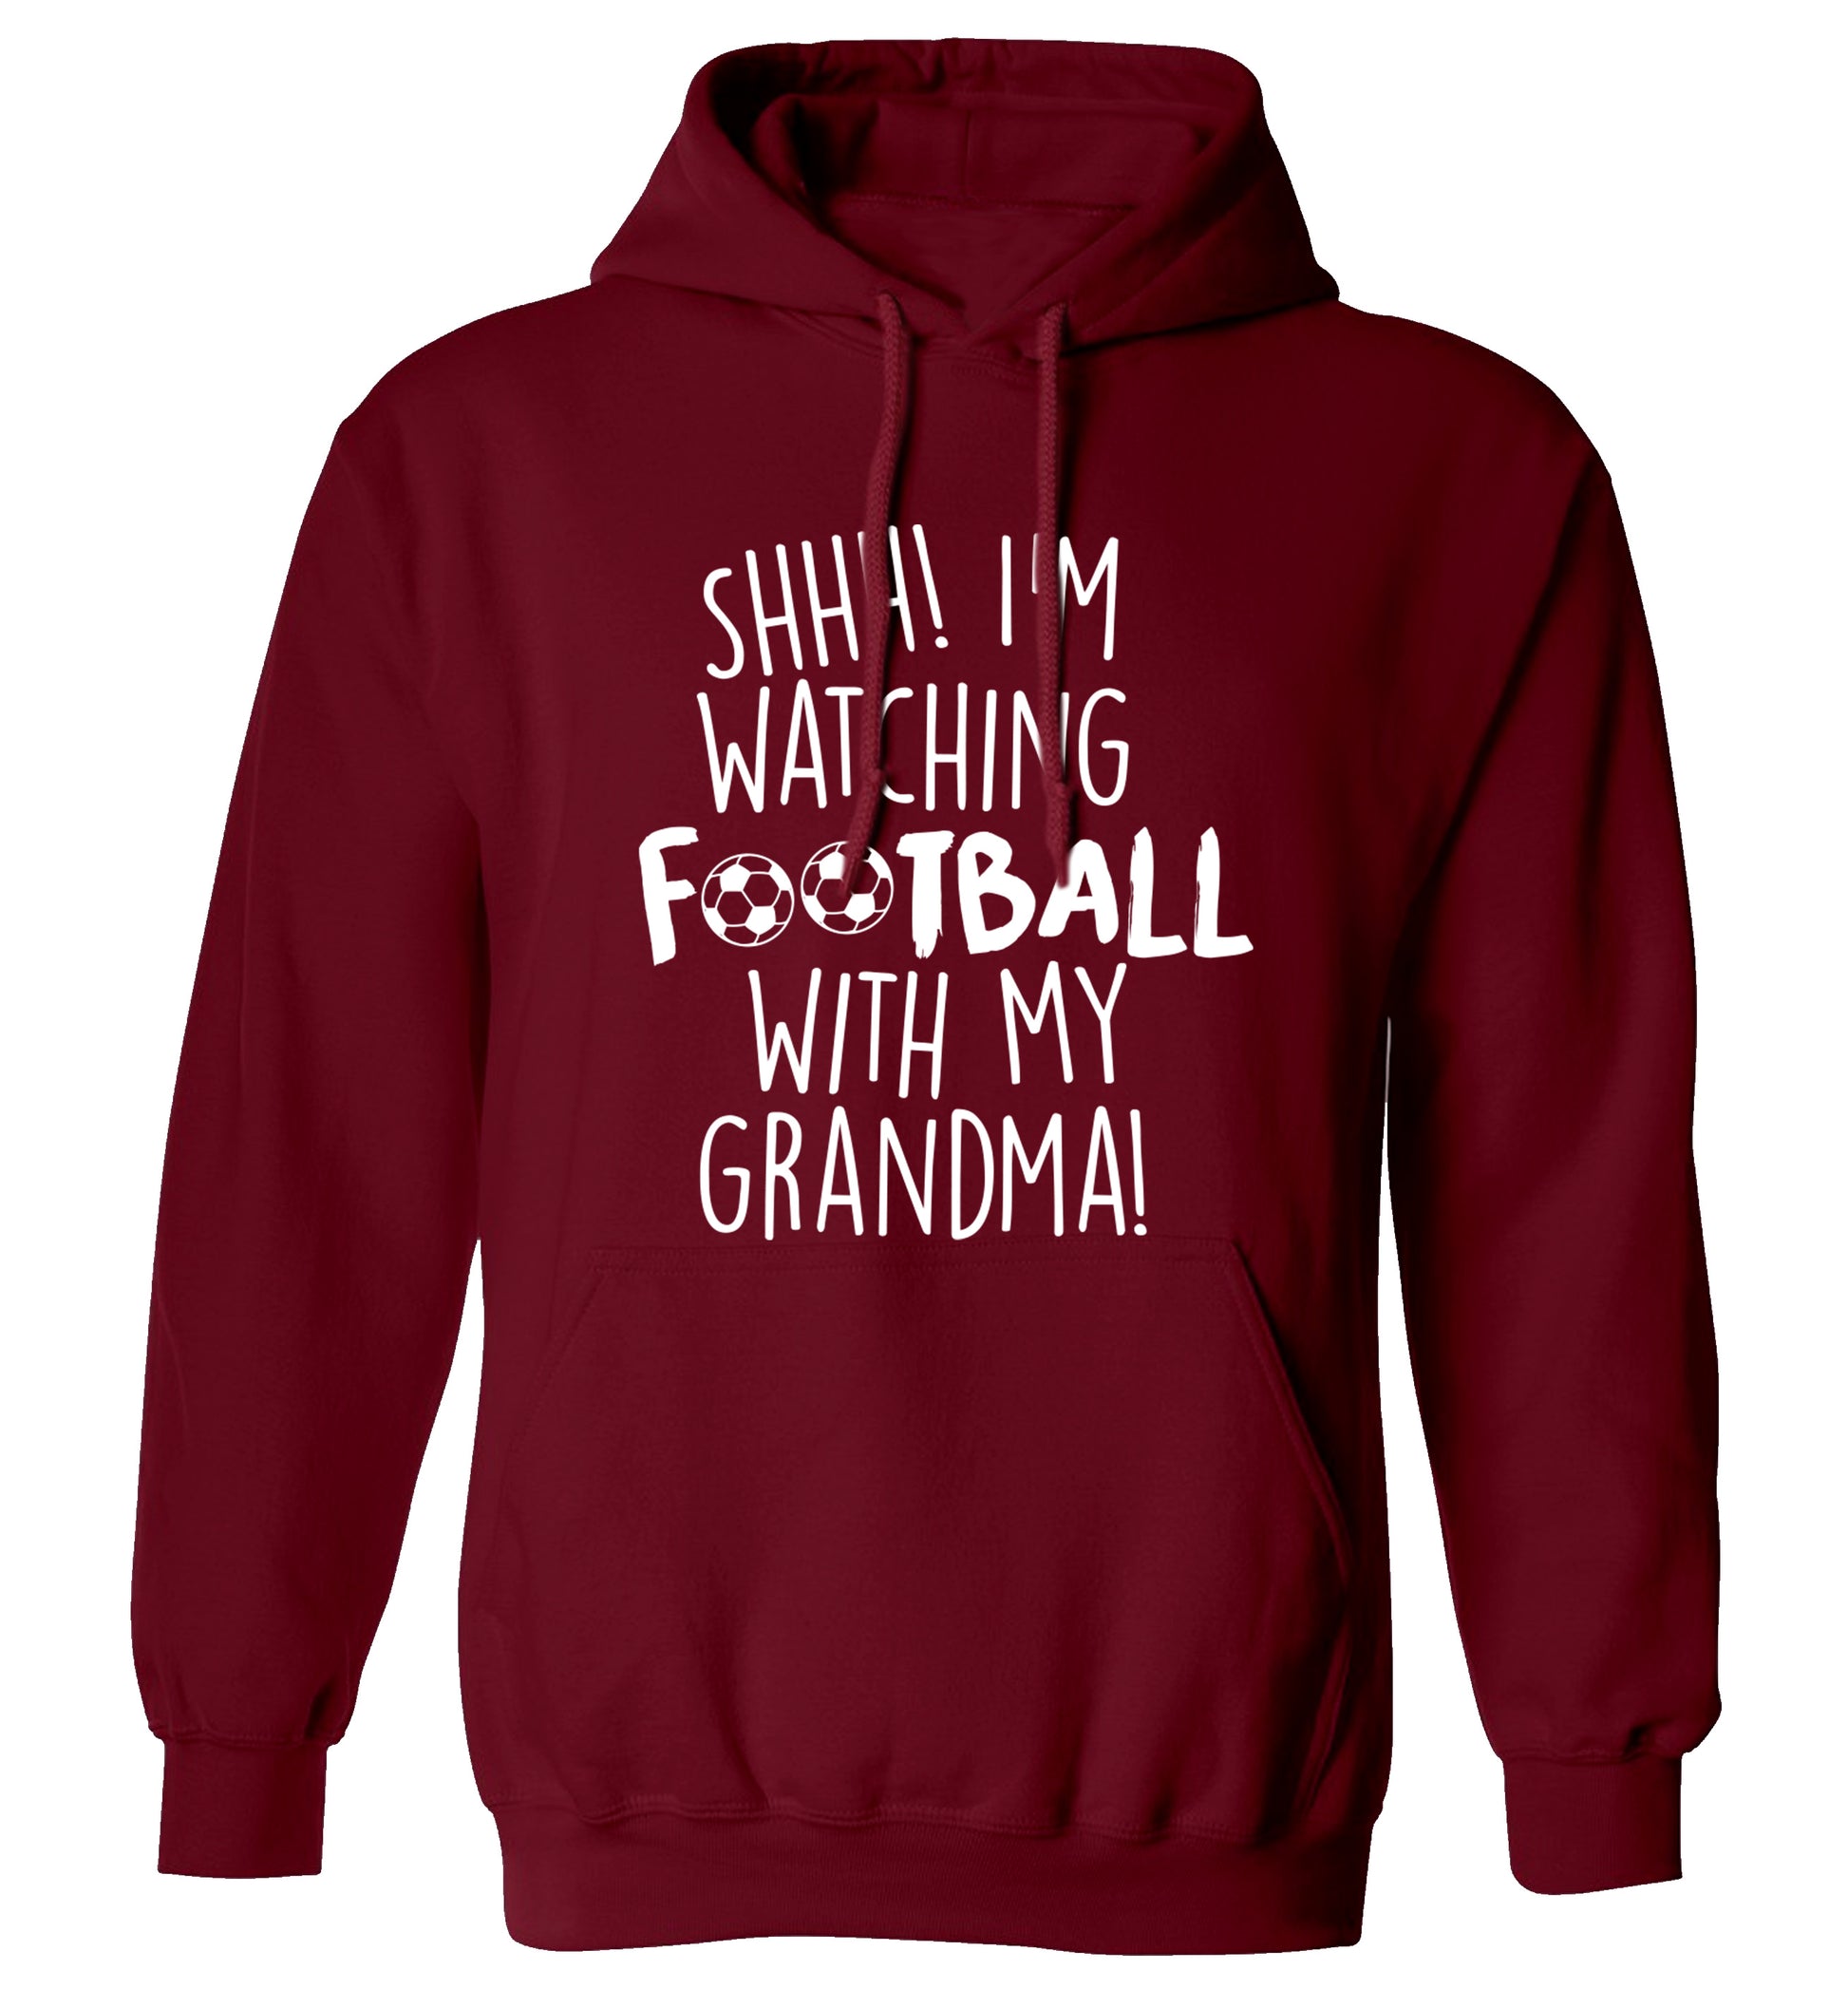 Shhh I'm watching football with my grandma adults unisexmaroon hoodie 2XL